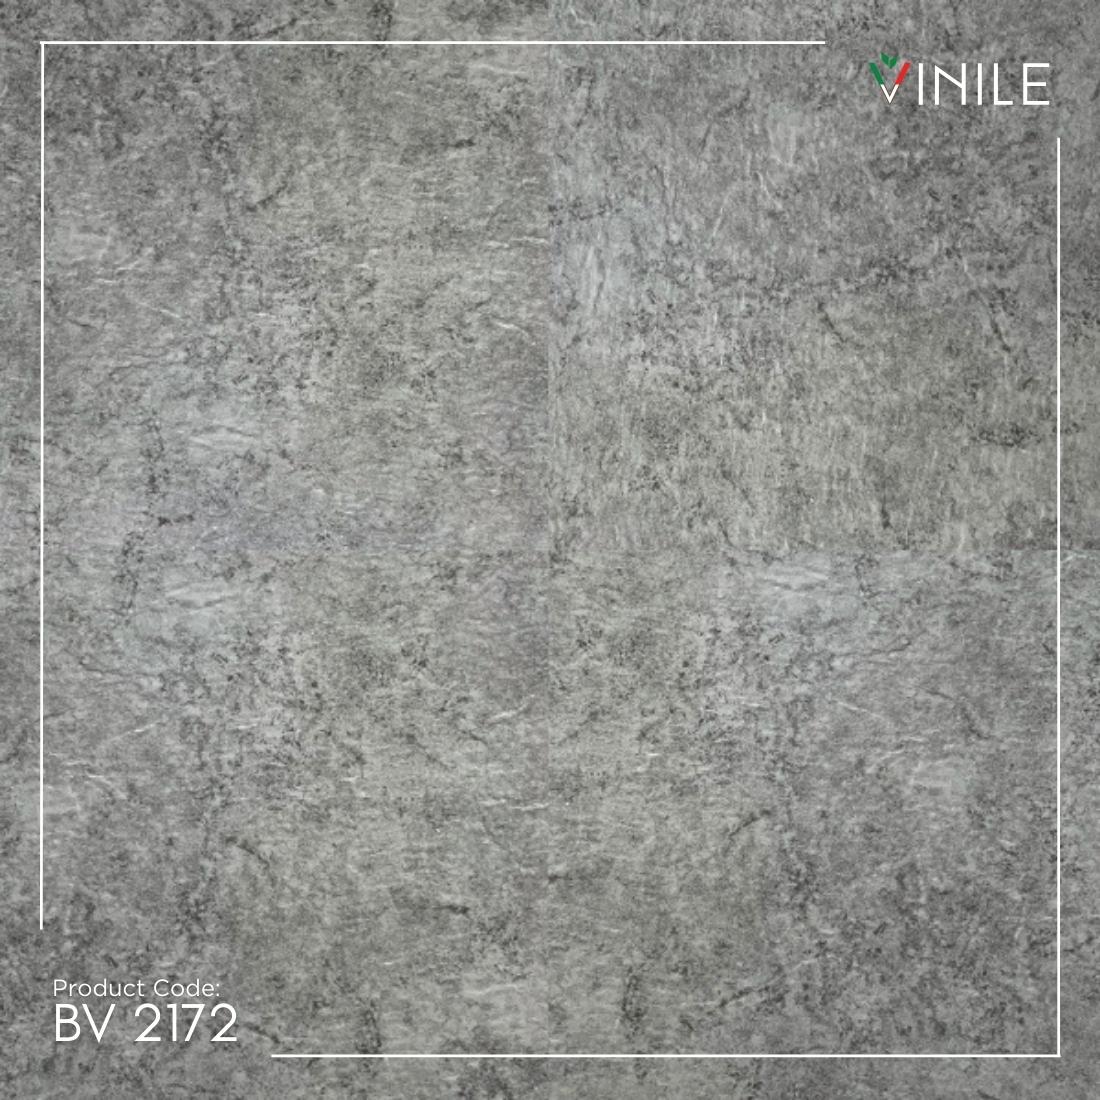 LVT flooring by Vinile Stone Series Product Code: BV 2172